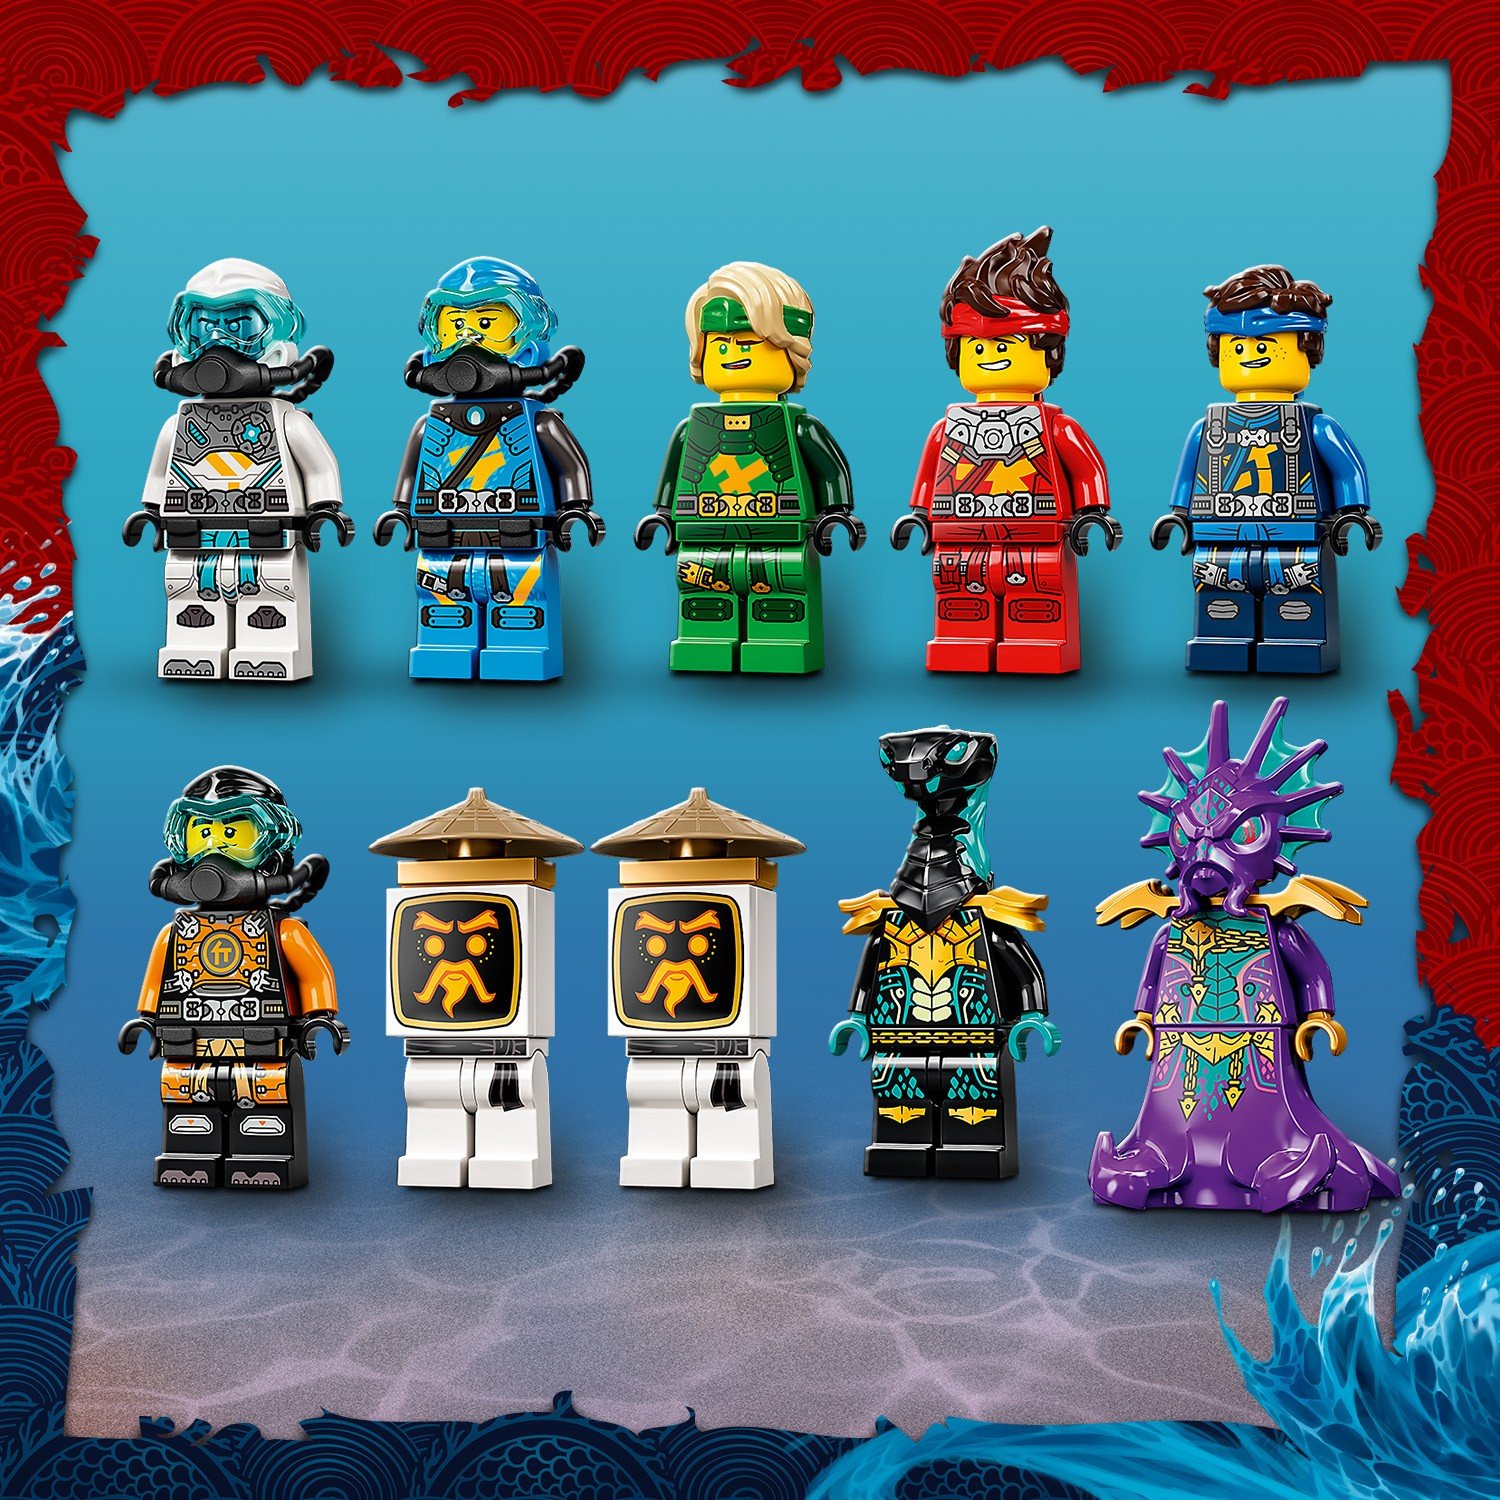 Lego Ninjago 71756 Подводный «Дар Судьбы»